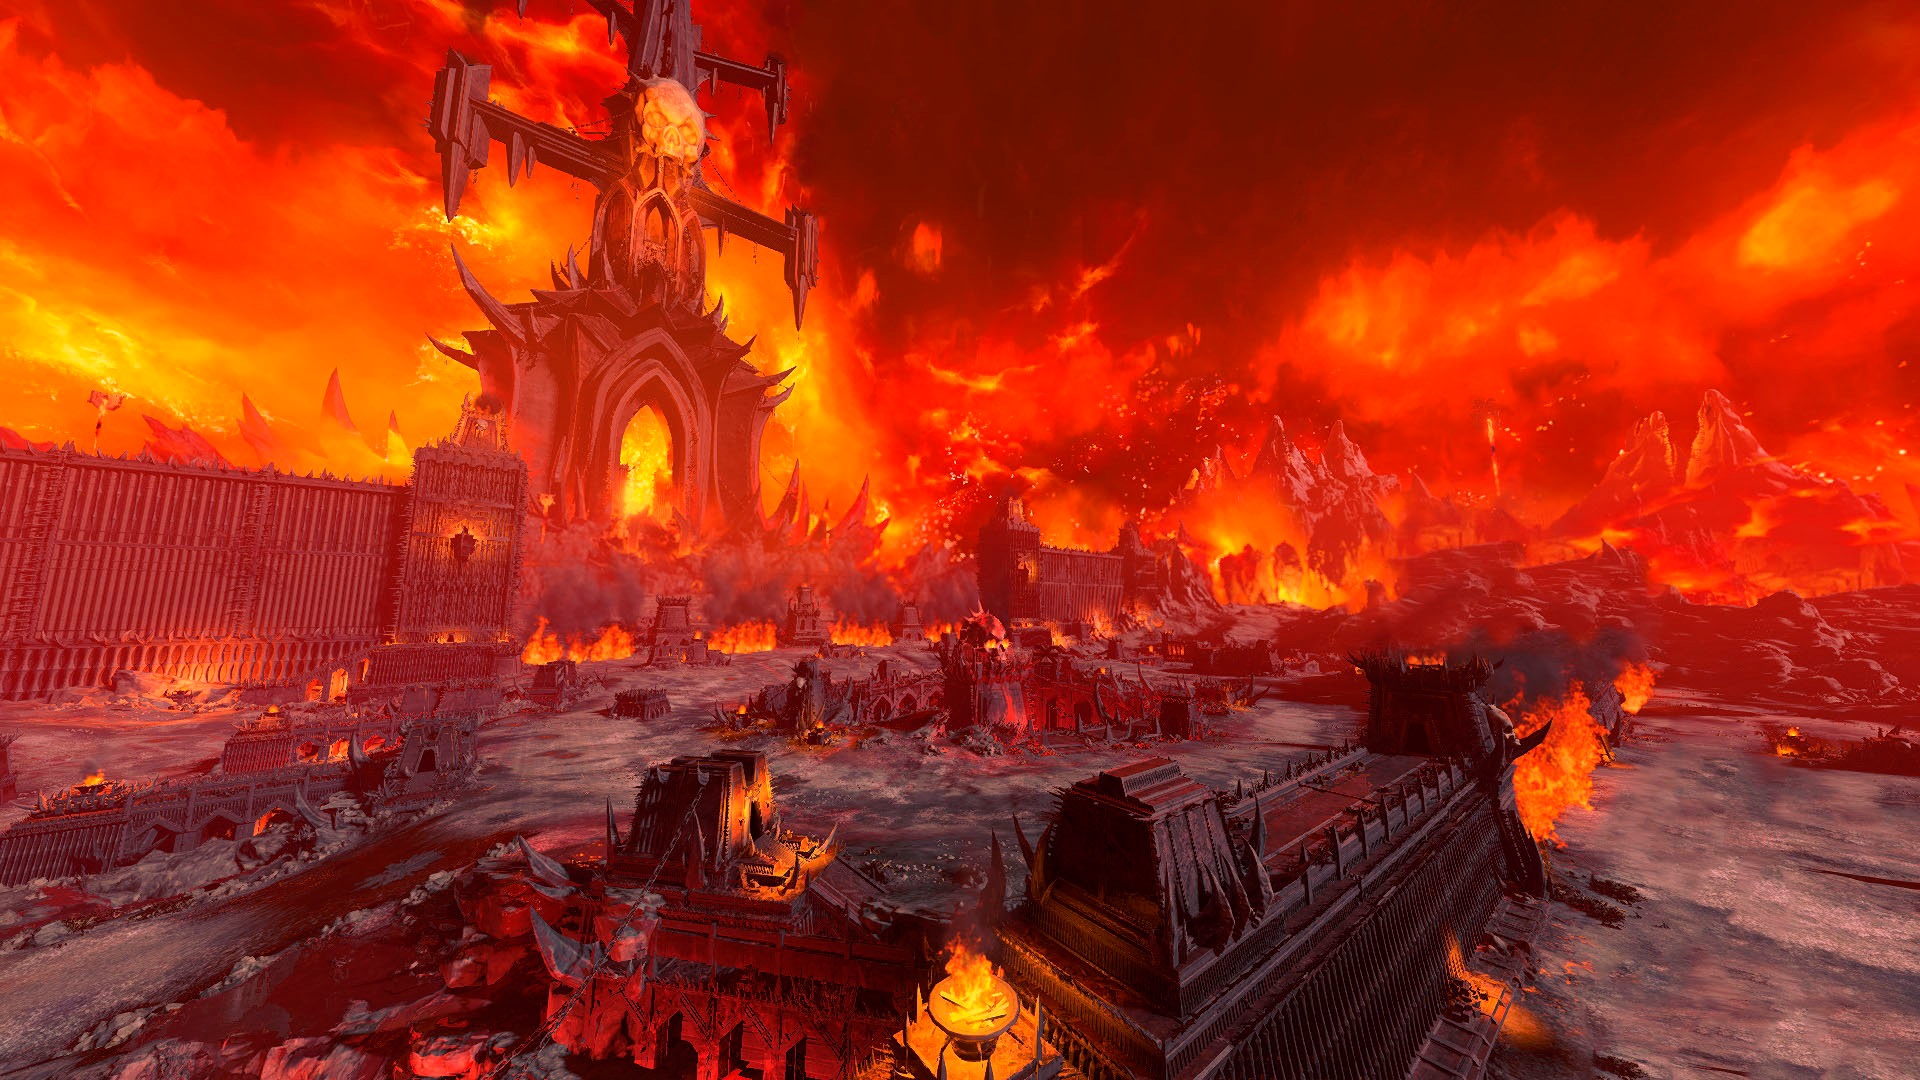 Sega Spielesoftware »Total War: Warhammer 3 LE«, PC